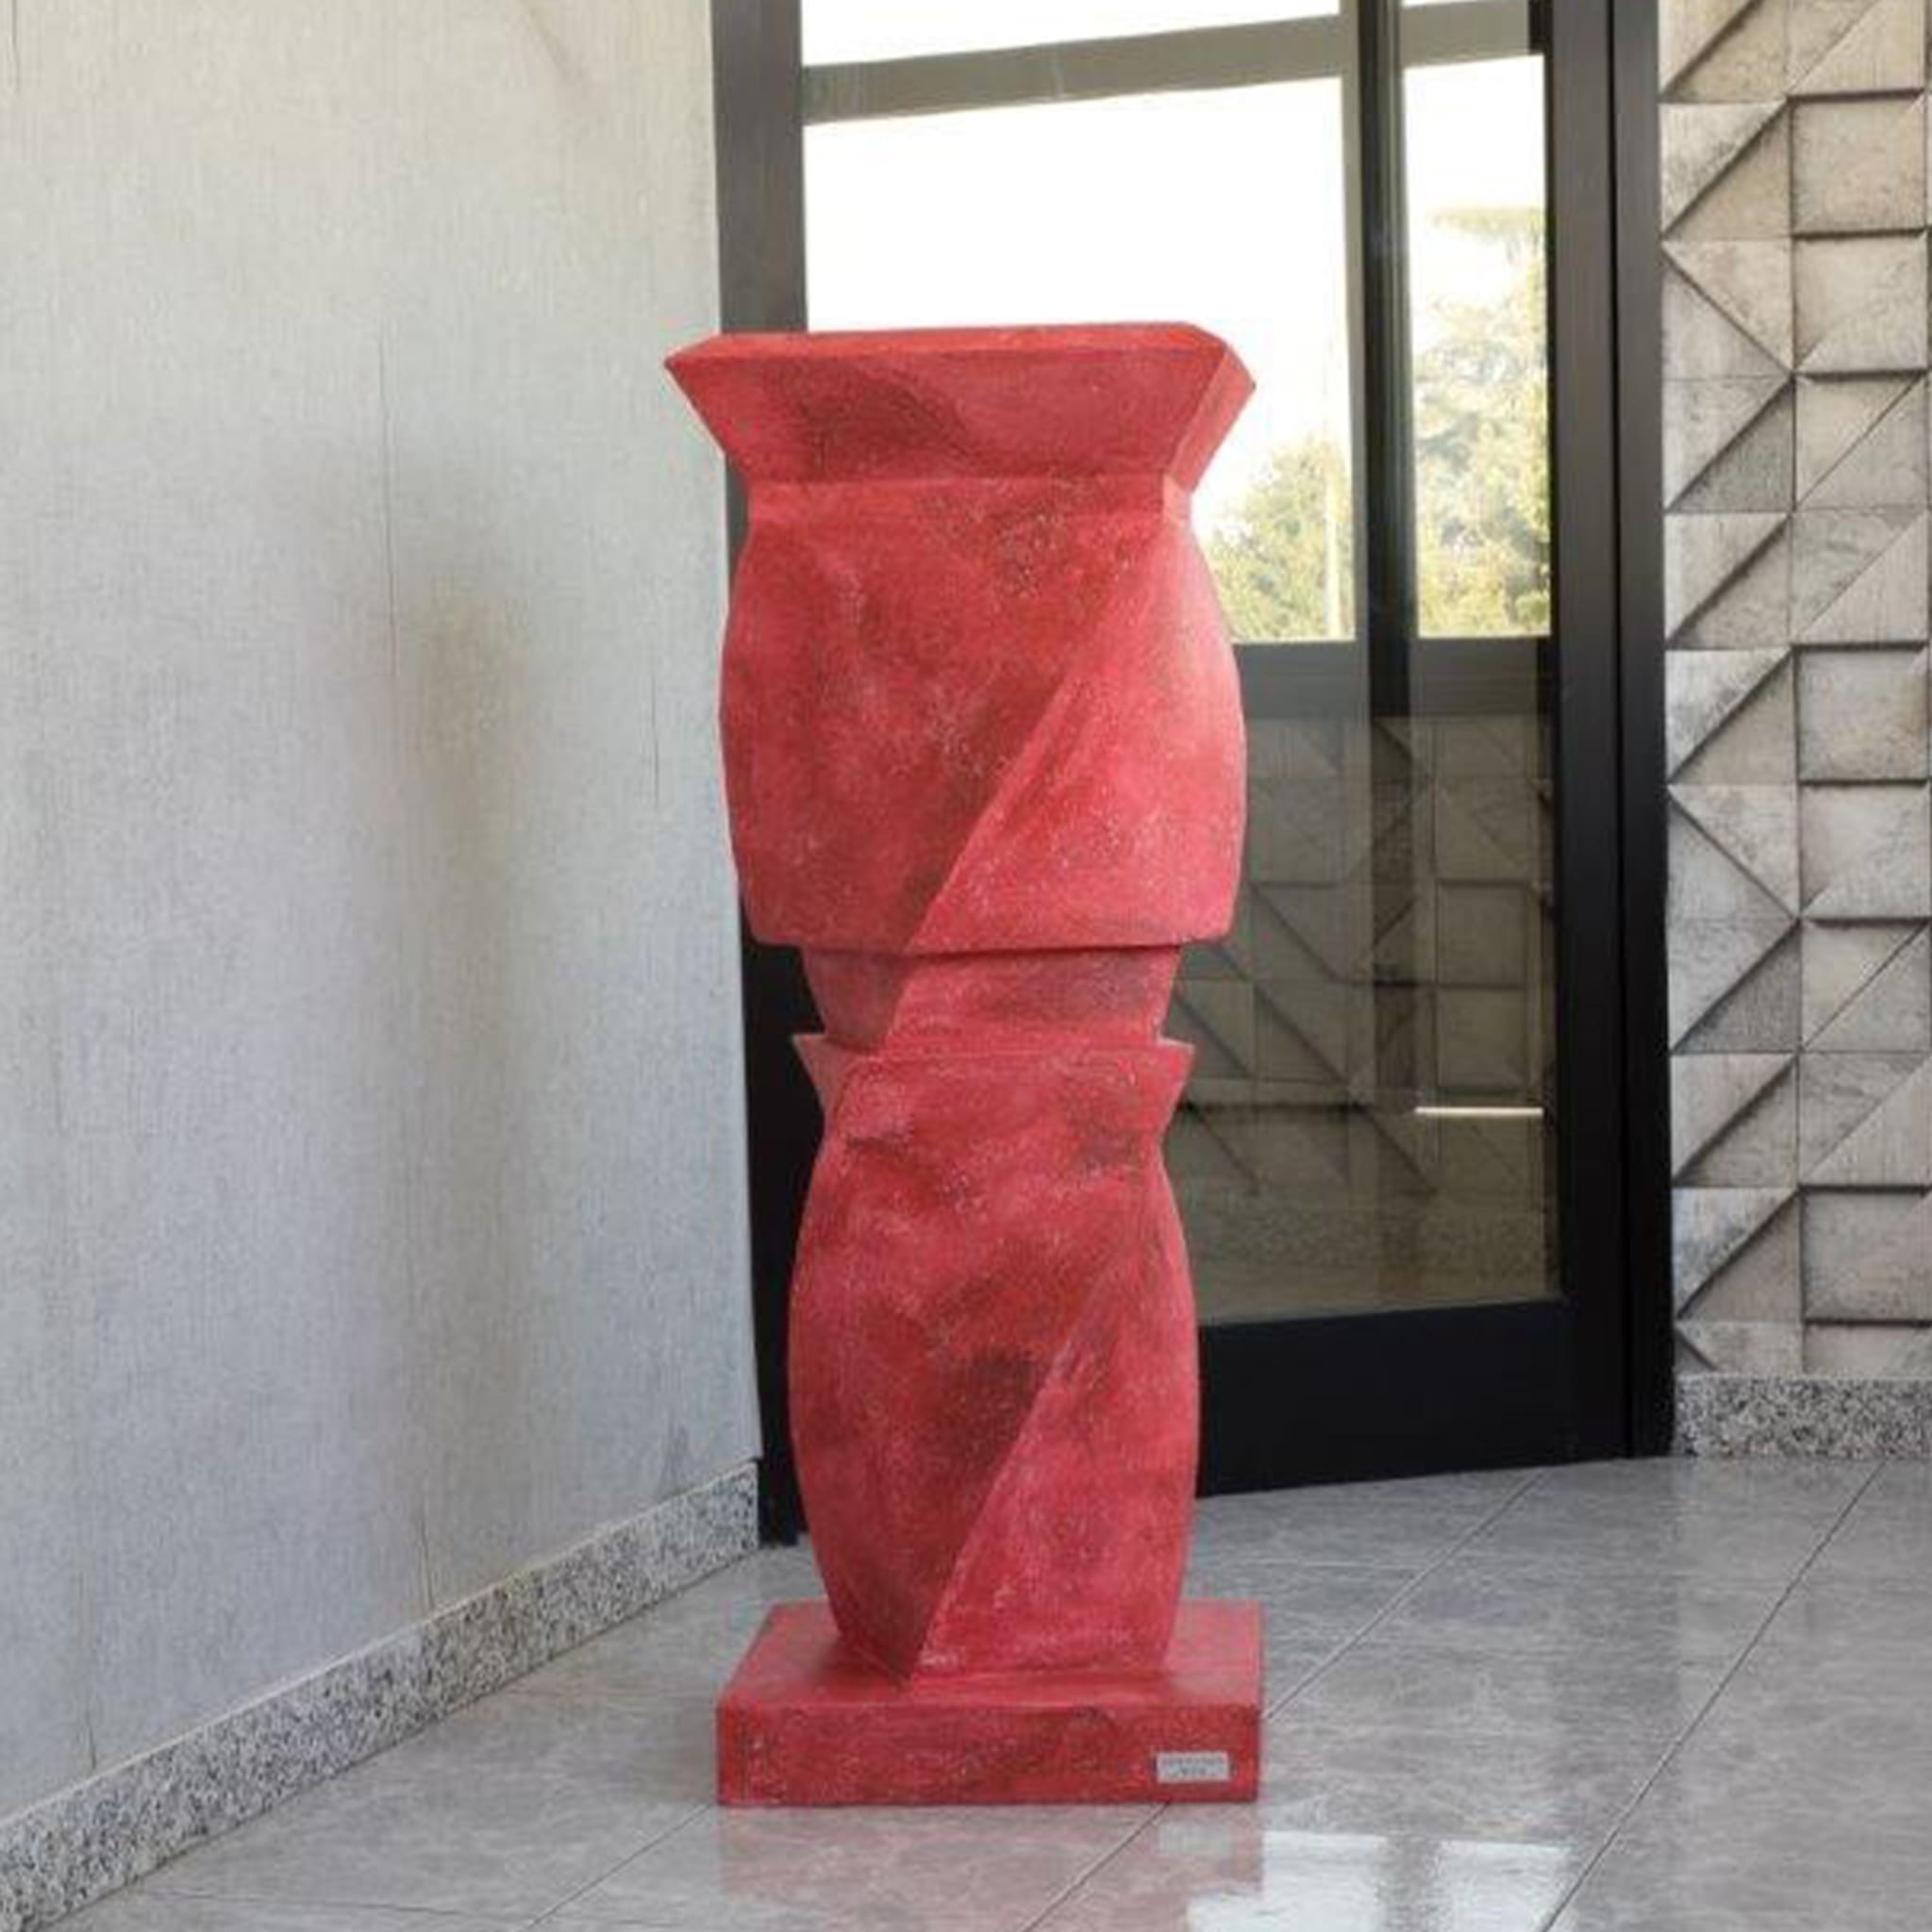 The Spiral Red Decorative Sculpture - Alternative view 4